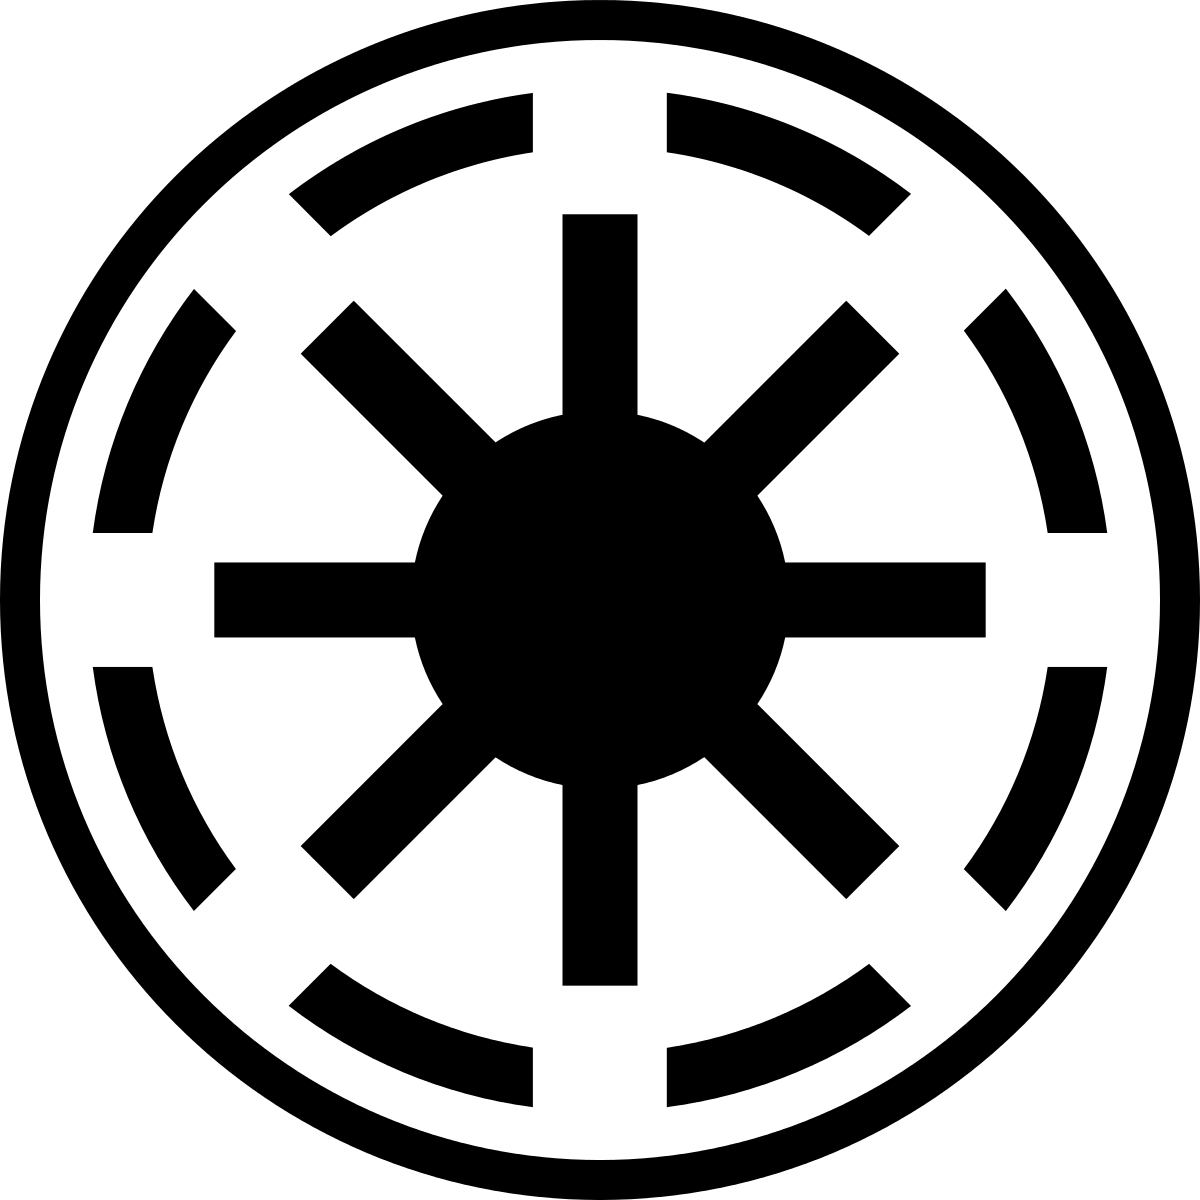 A Black And White Circular Symbol